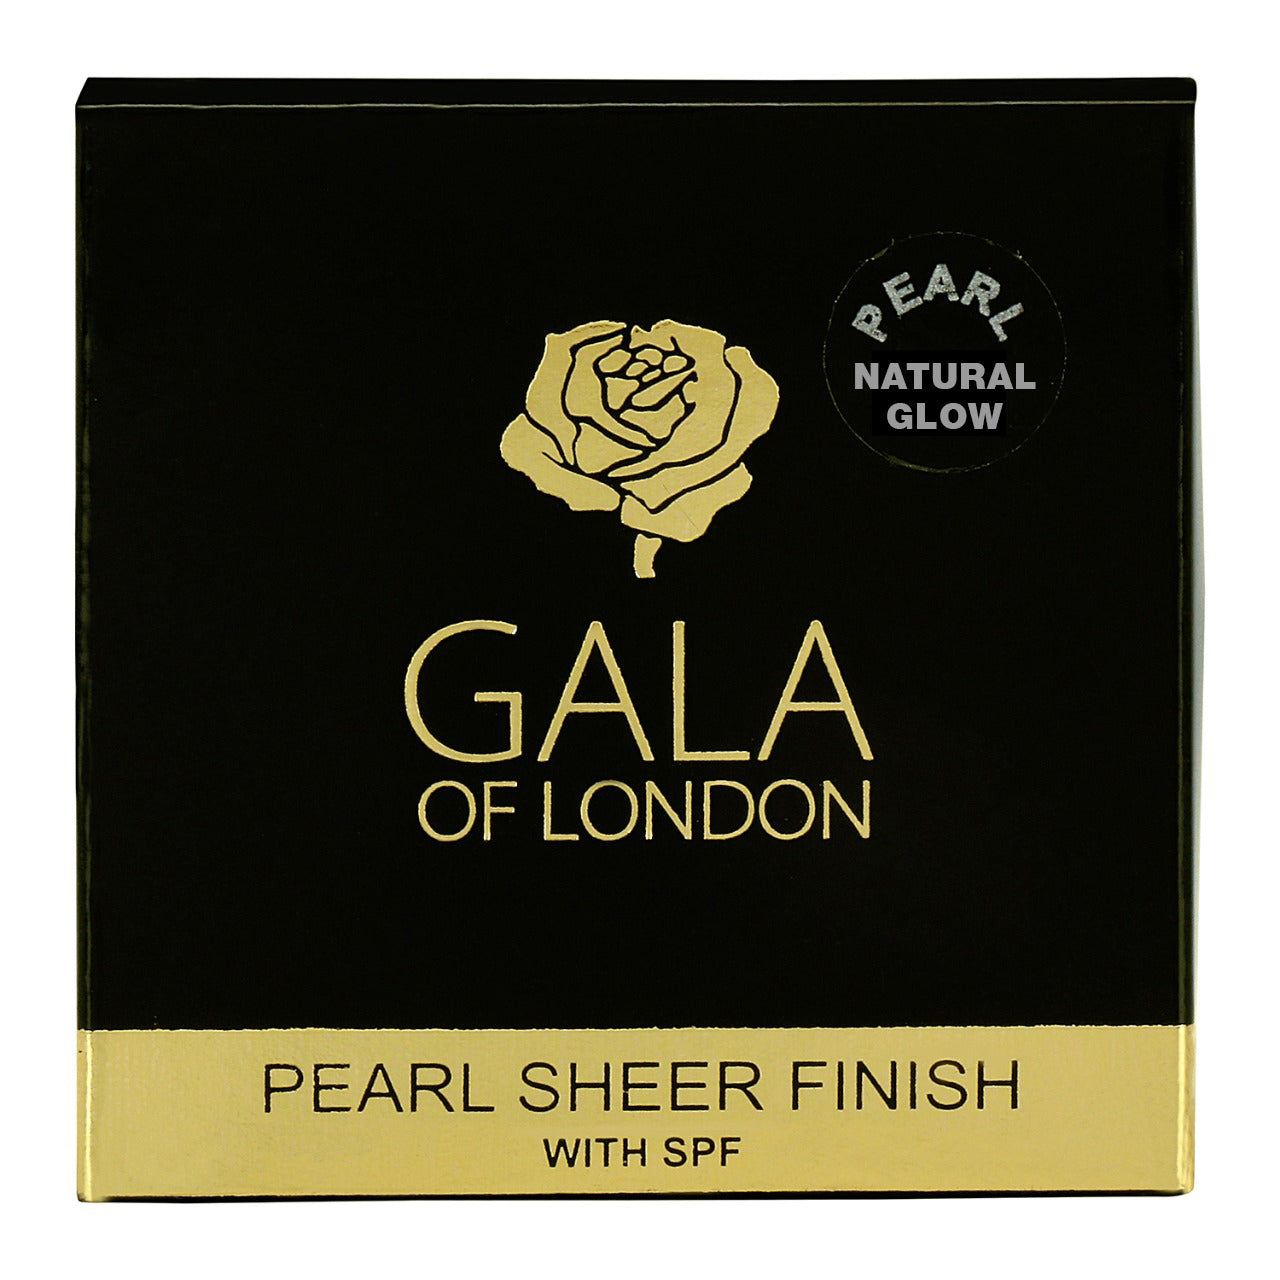 Gala of London Pearl Sheer Finish 12g - Natural Glow